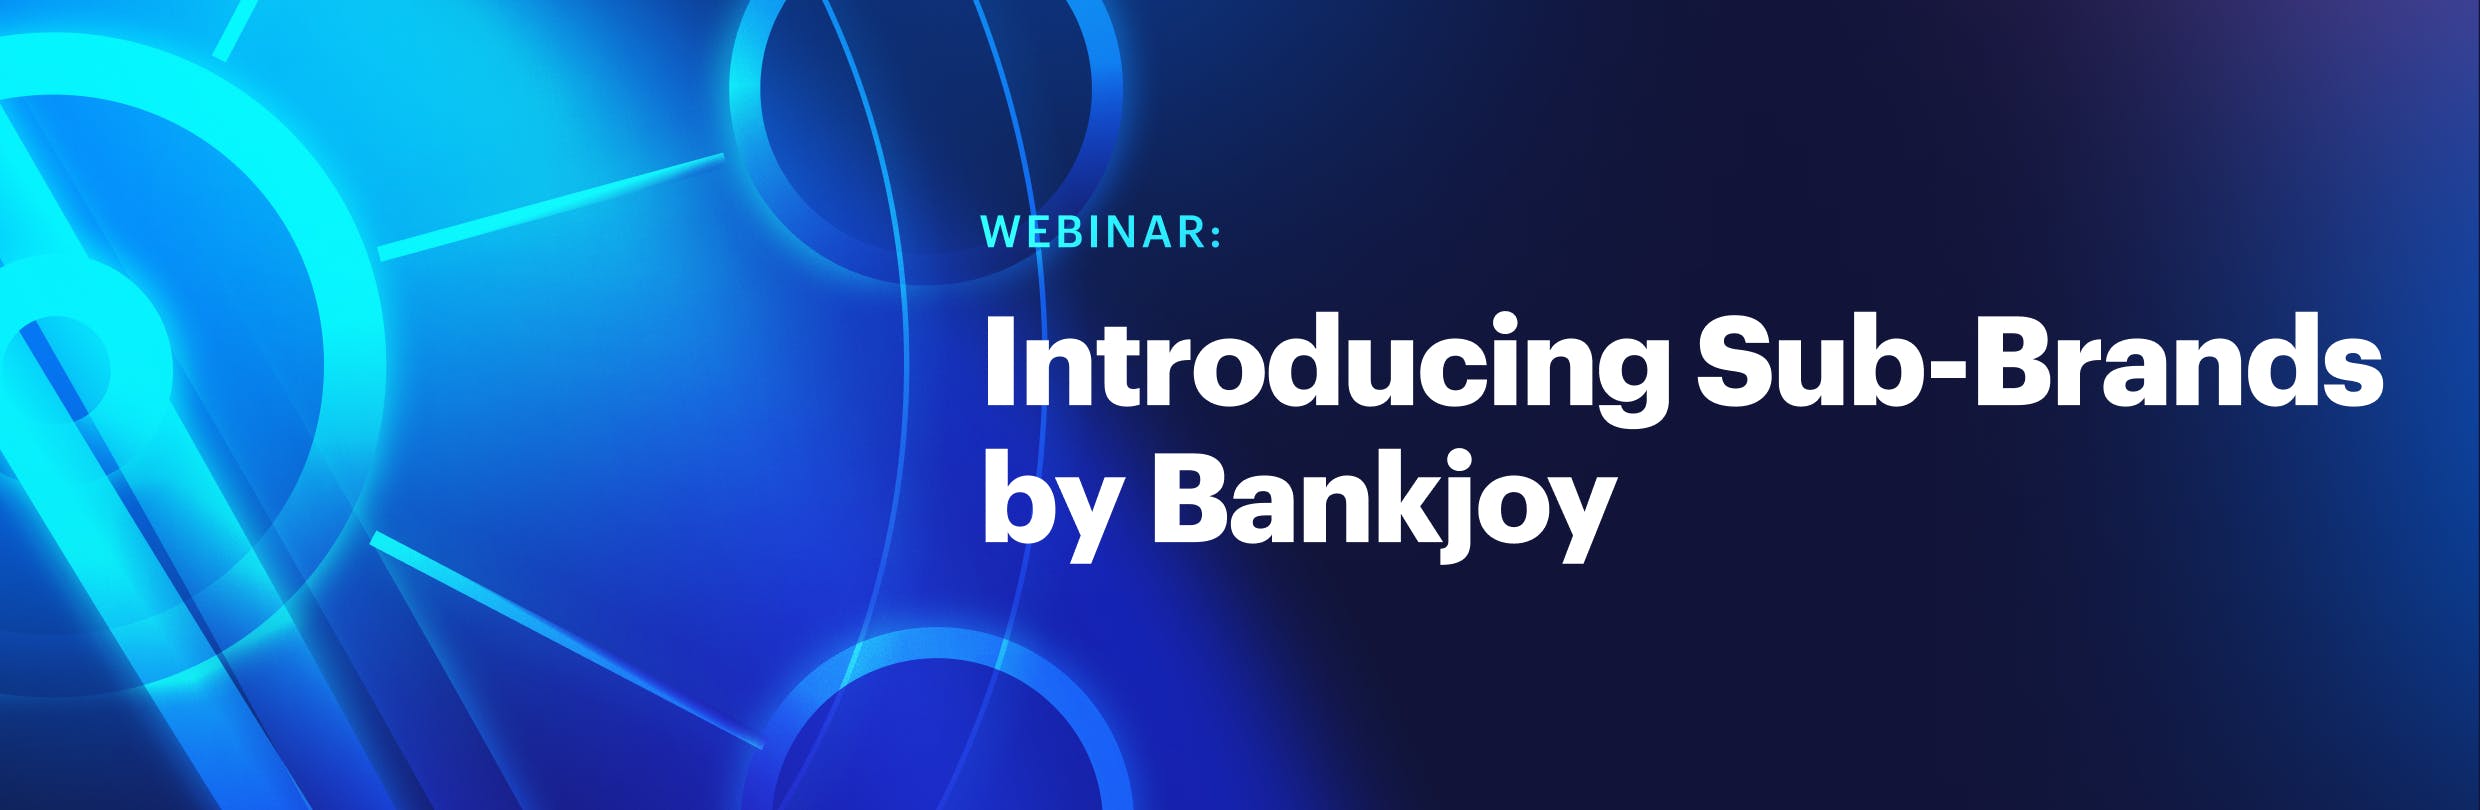 Webinar: Introducing Sub-Brands by Bankjoy